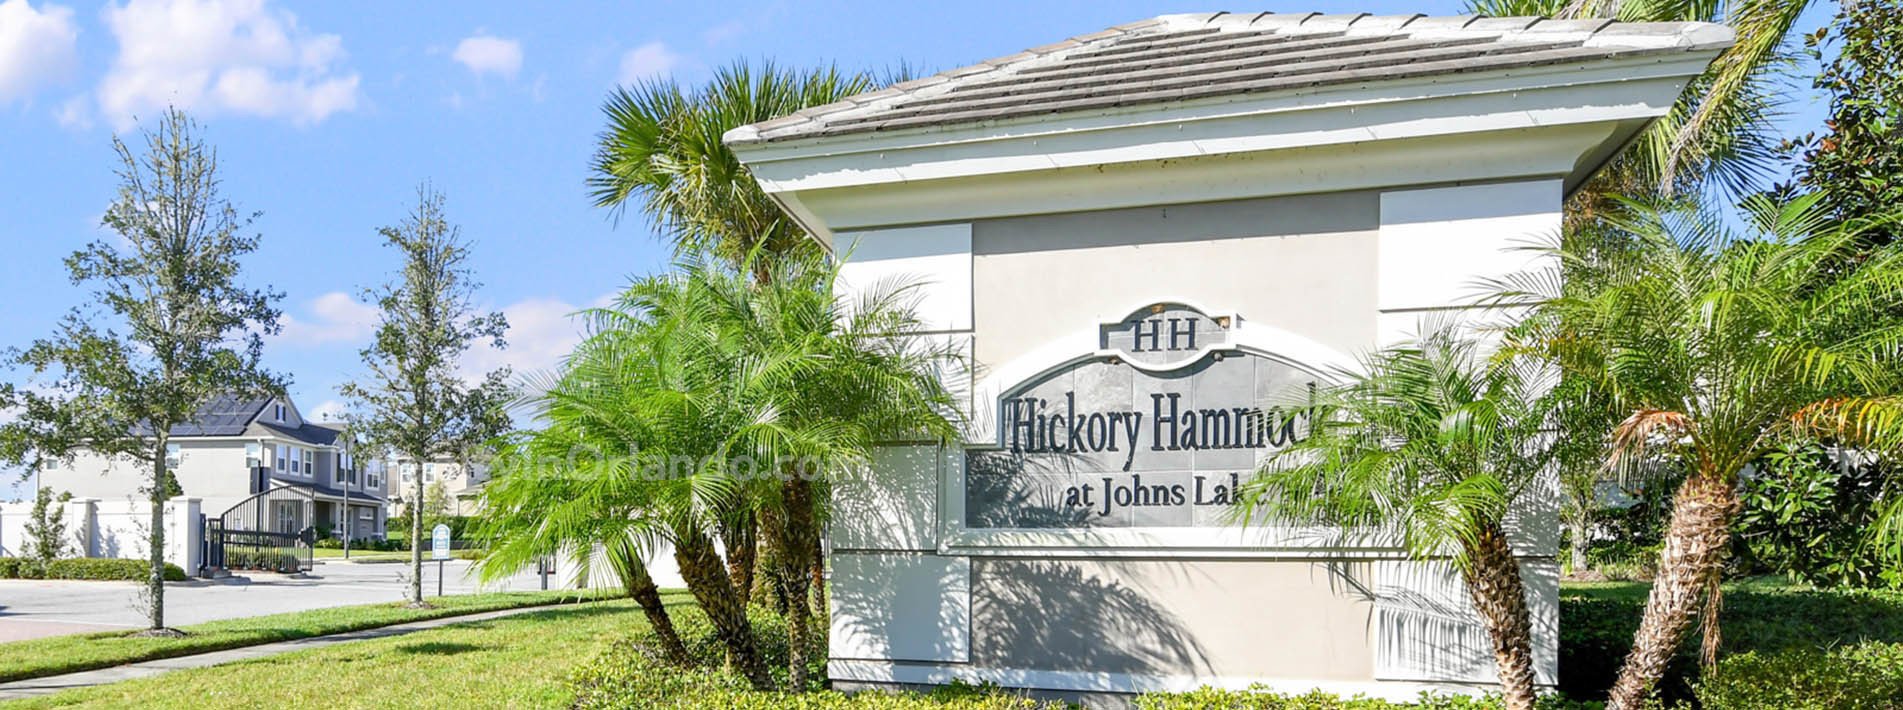 Hickory Hammock Winter Garden Homes for Sale